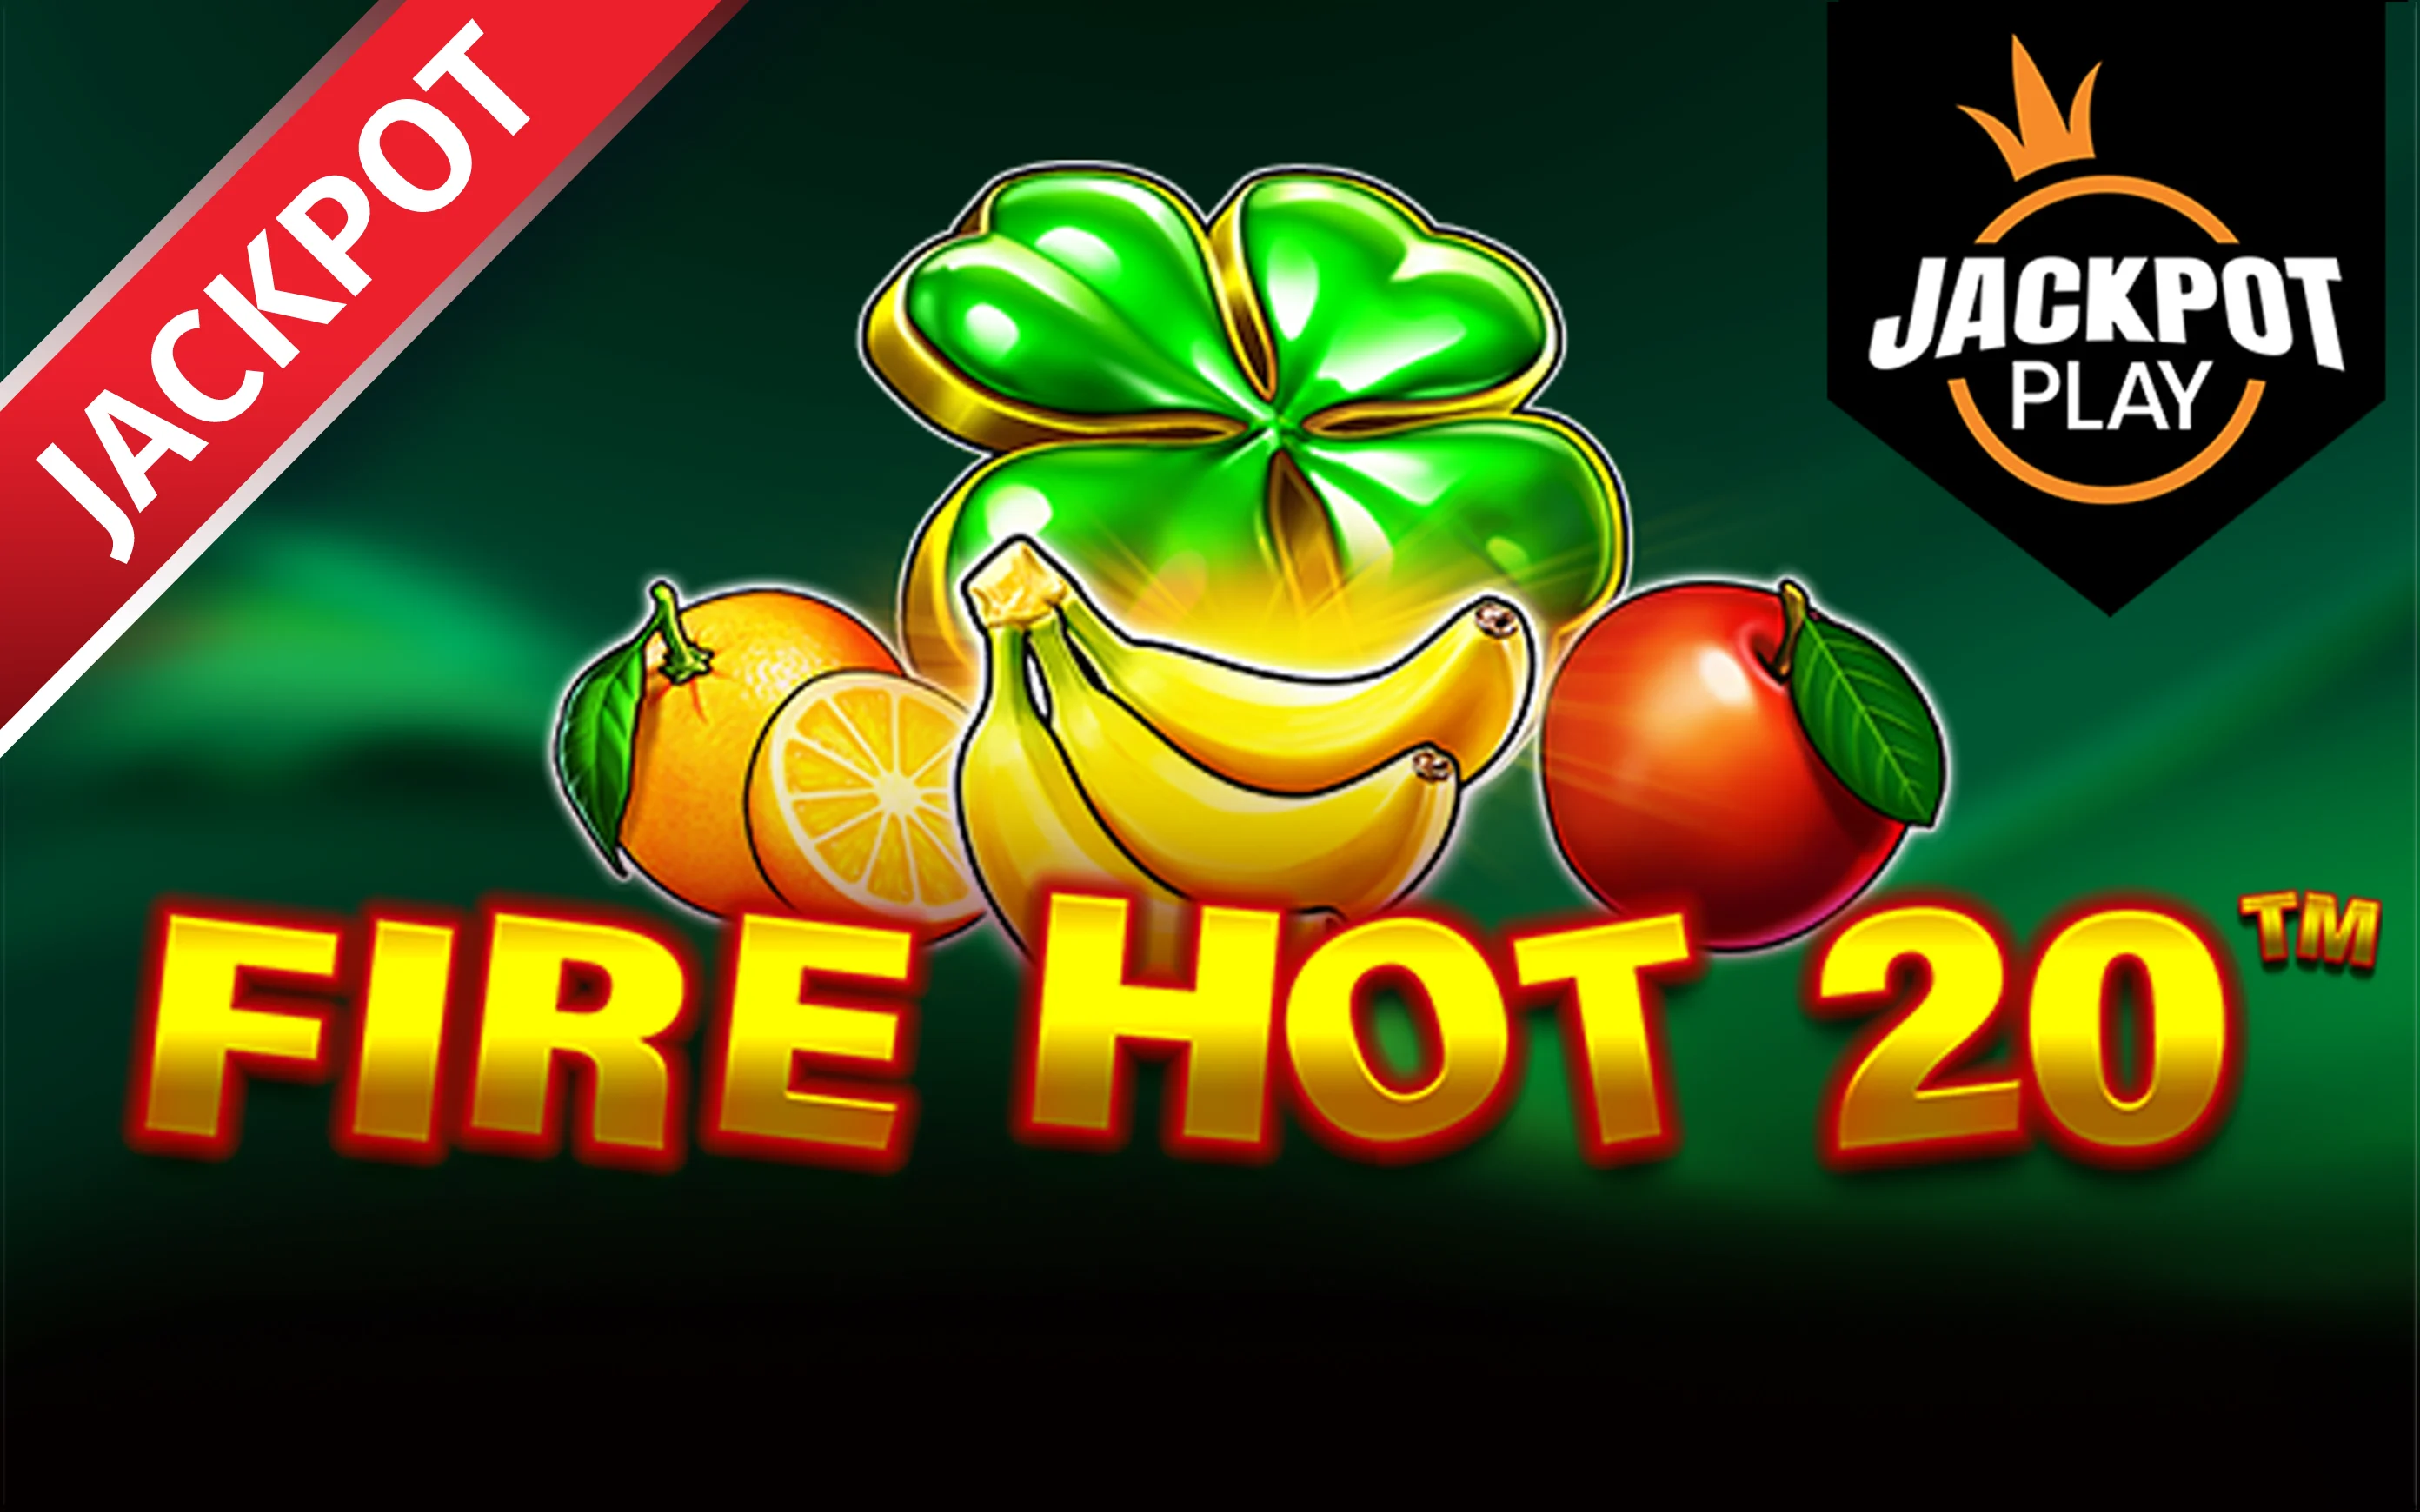 Play Fire Hot 20™ Jackpot Play on Starcasino.be online casino